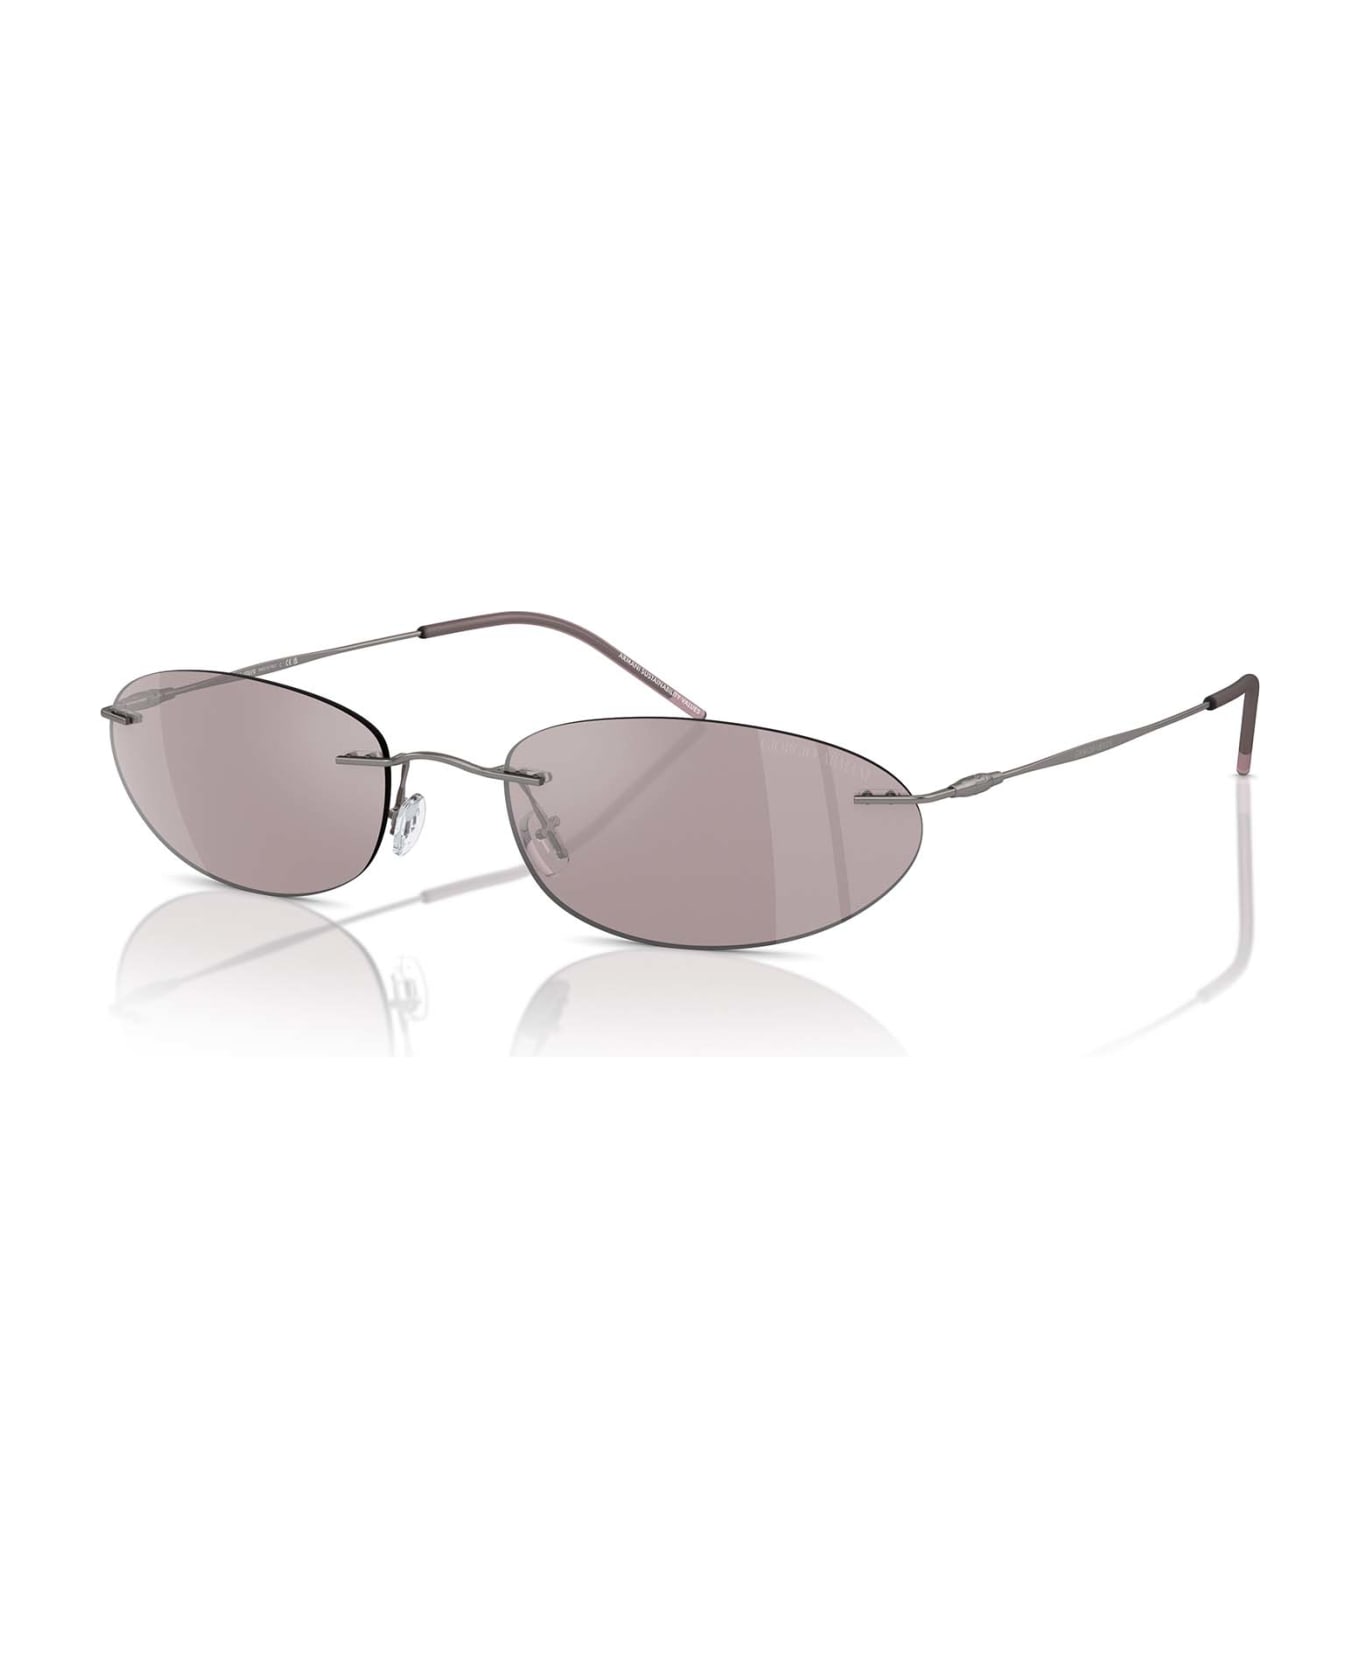 Giorgio Armani Ar1508m Matte Gunmetal Sunglasses - Matte Gunmetal サングラス